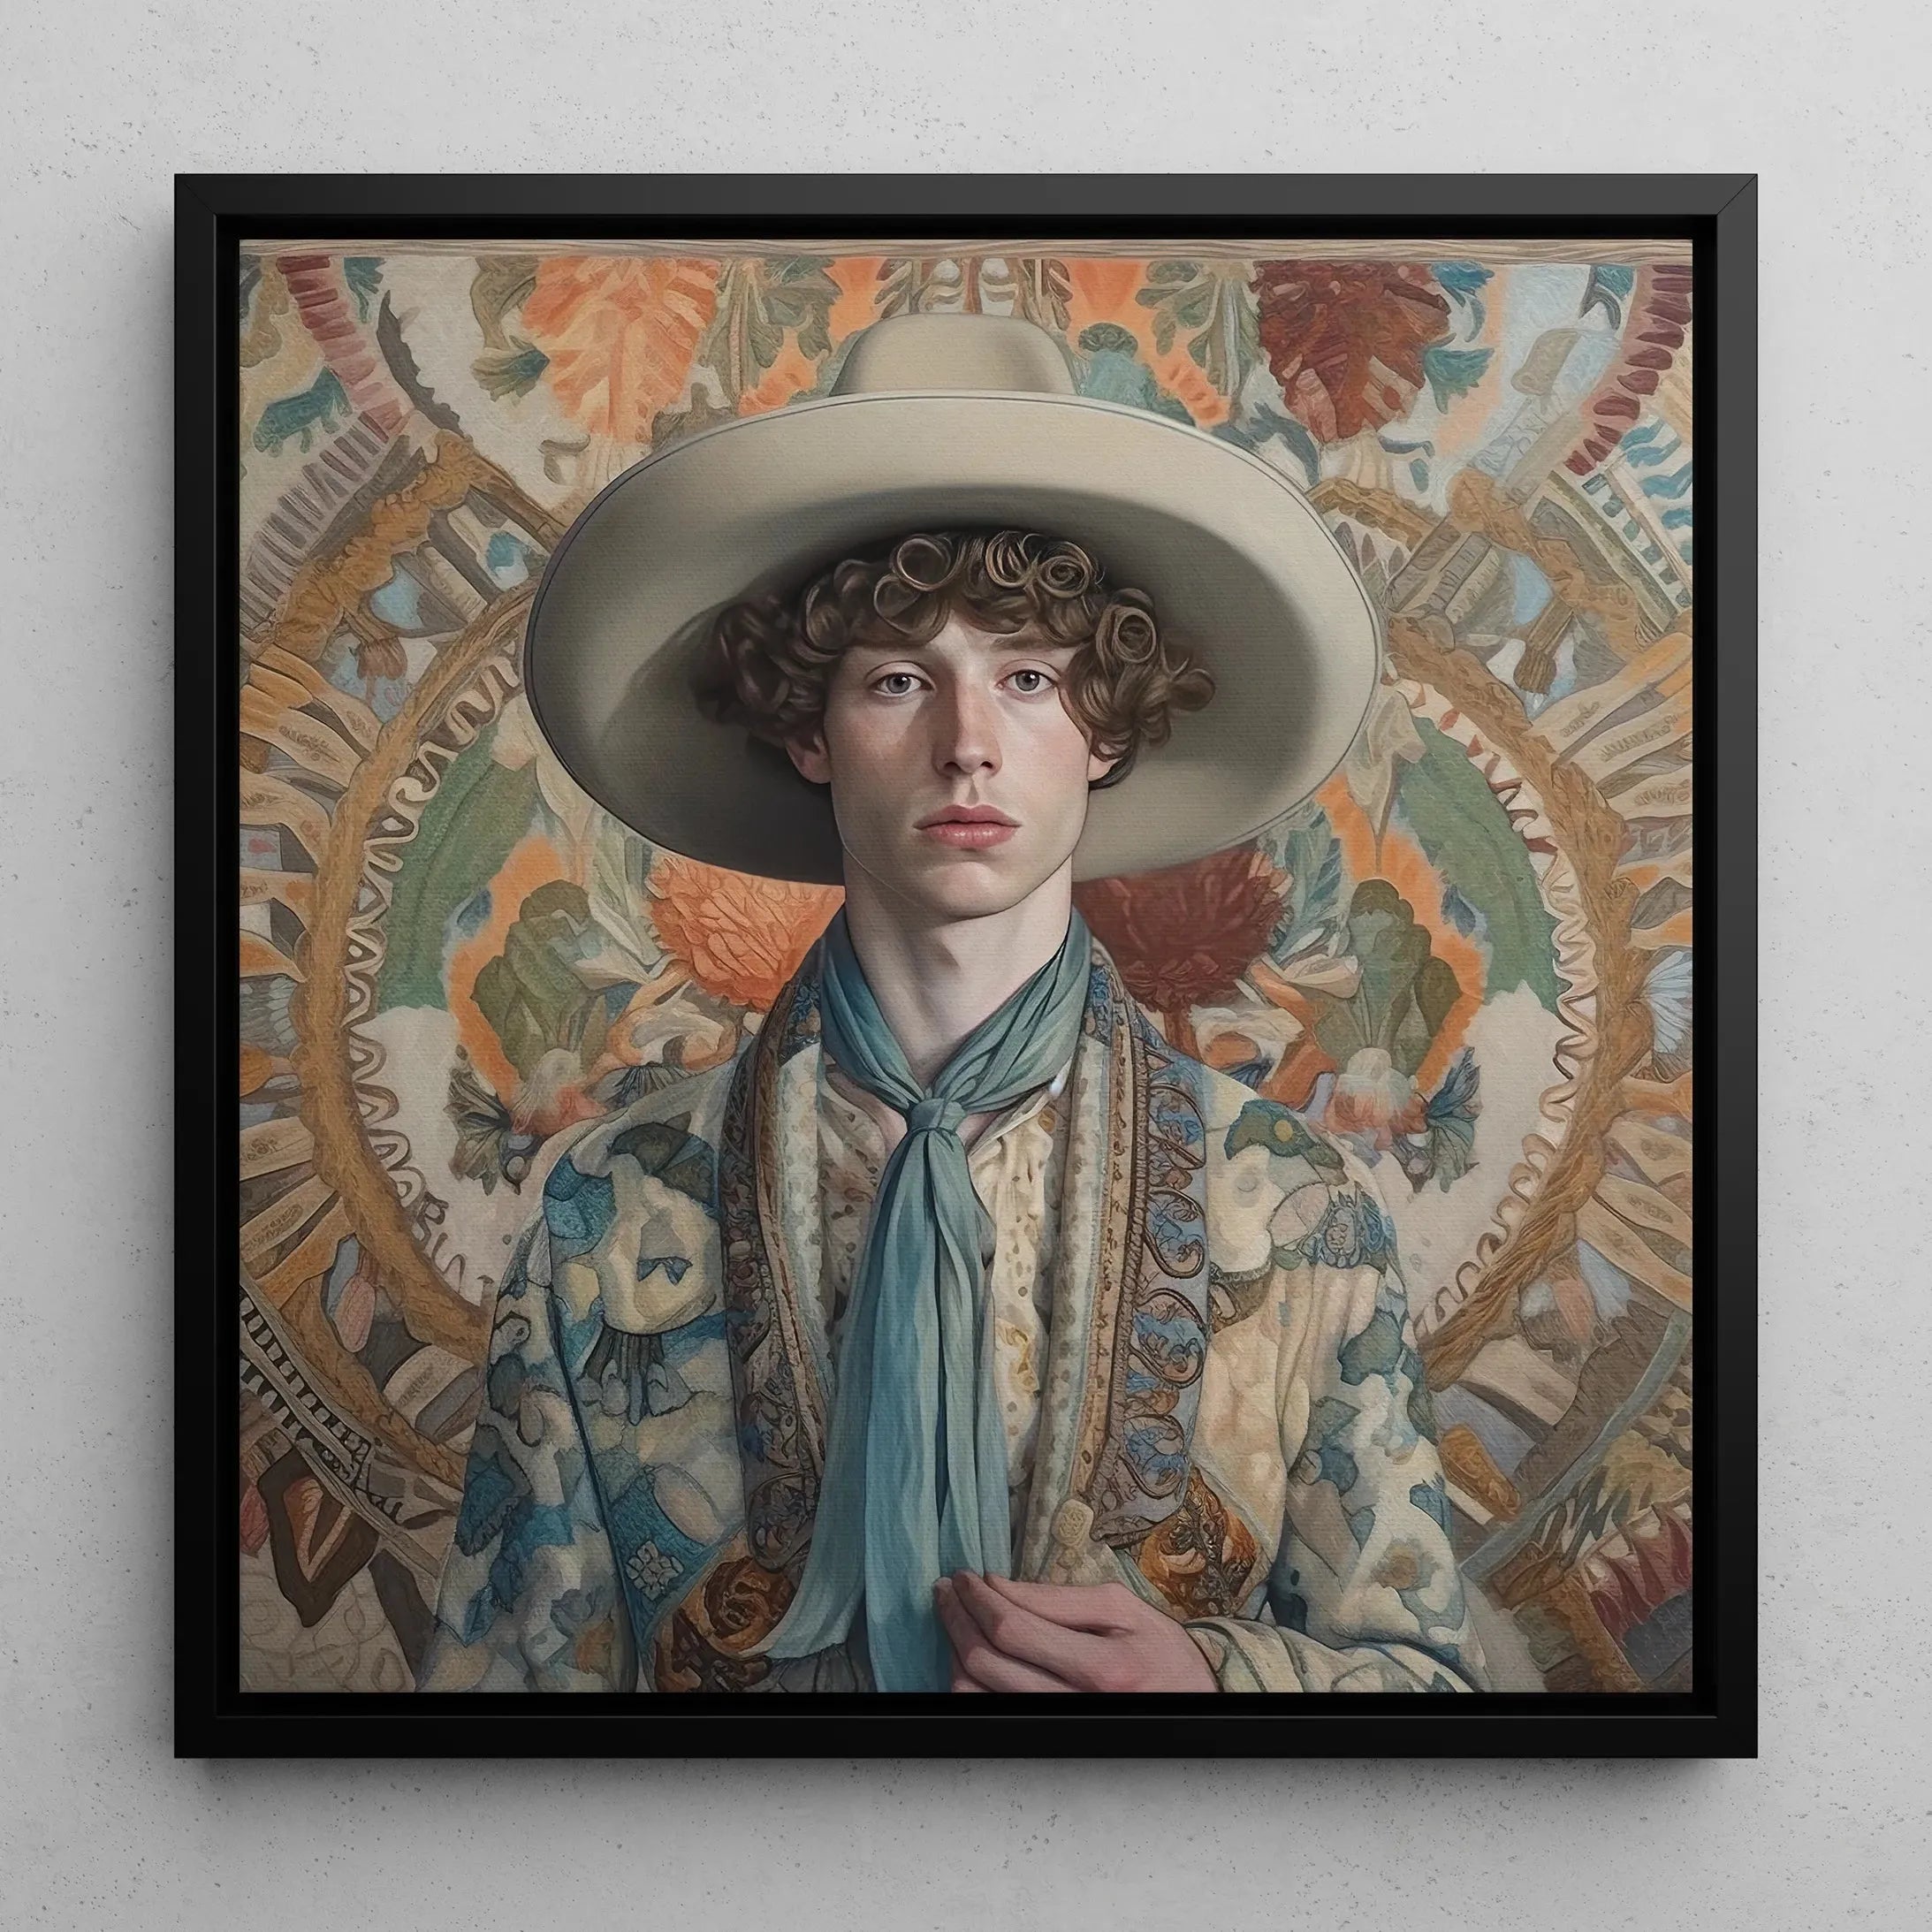 Theodore - Gay Cowboy Framed Canvas - Homosexual Dandy Art - 16’x16’ - Posters Prints & Visual Artwork - Aesthetic Art